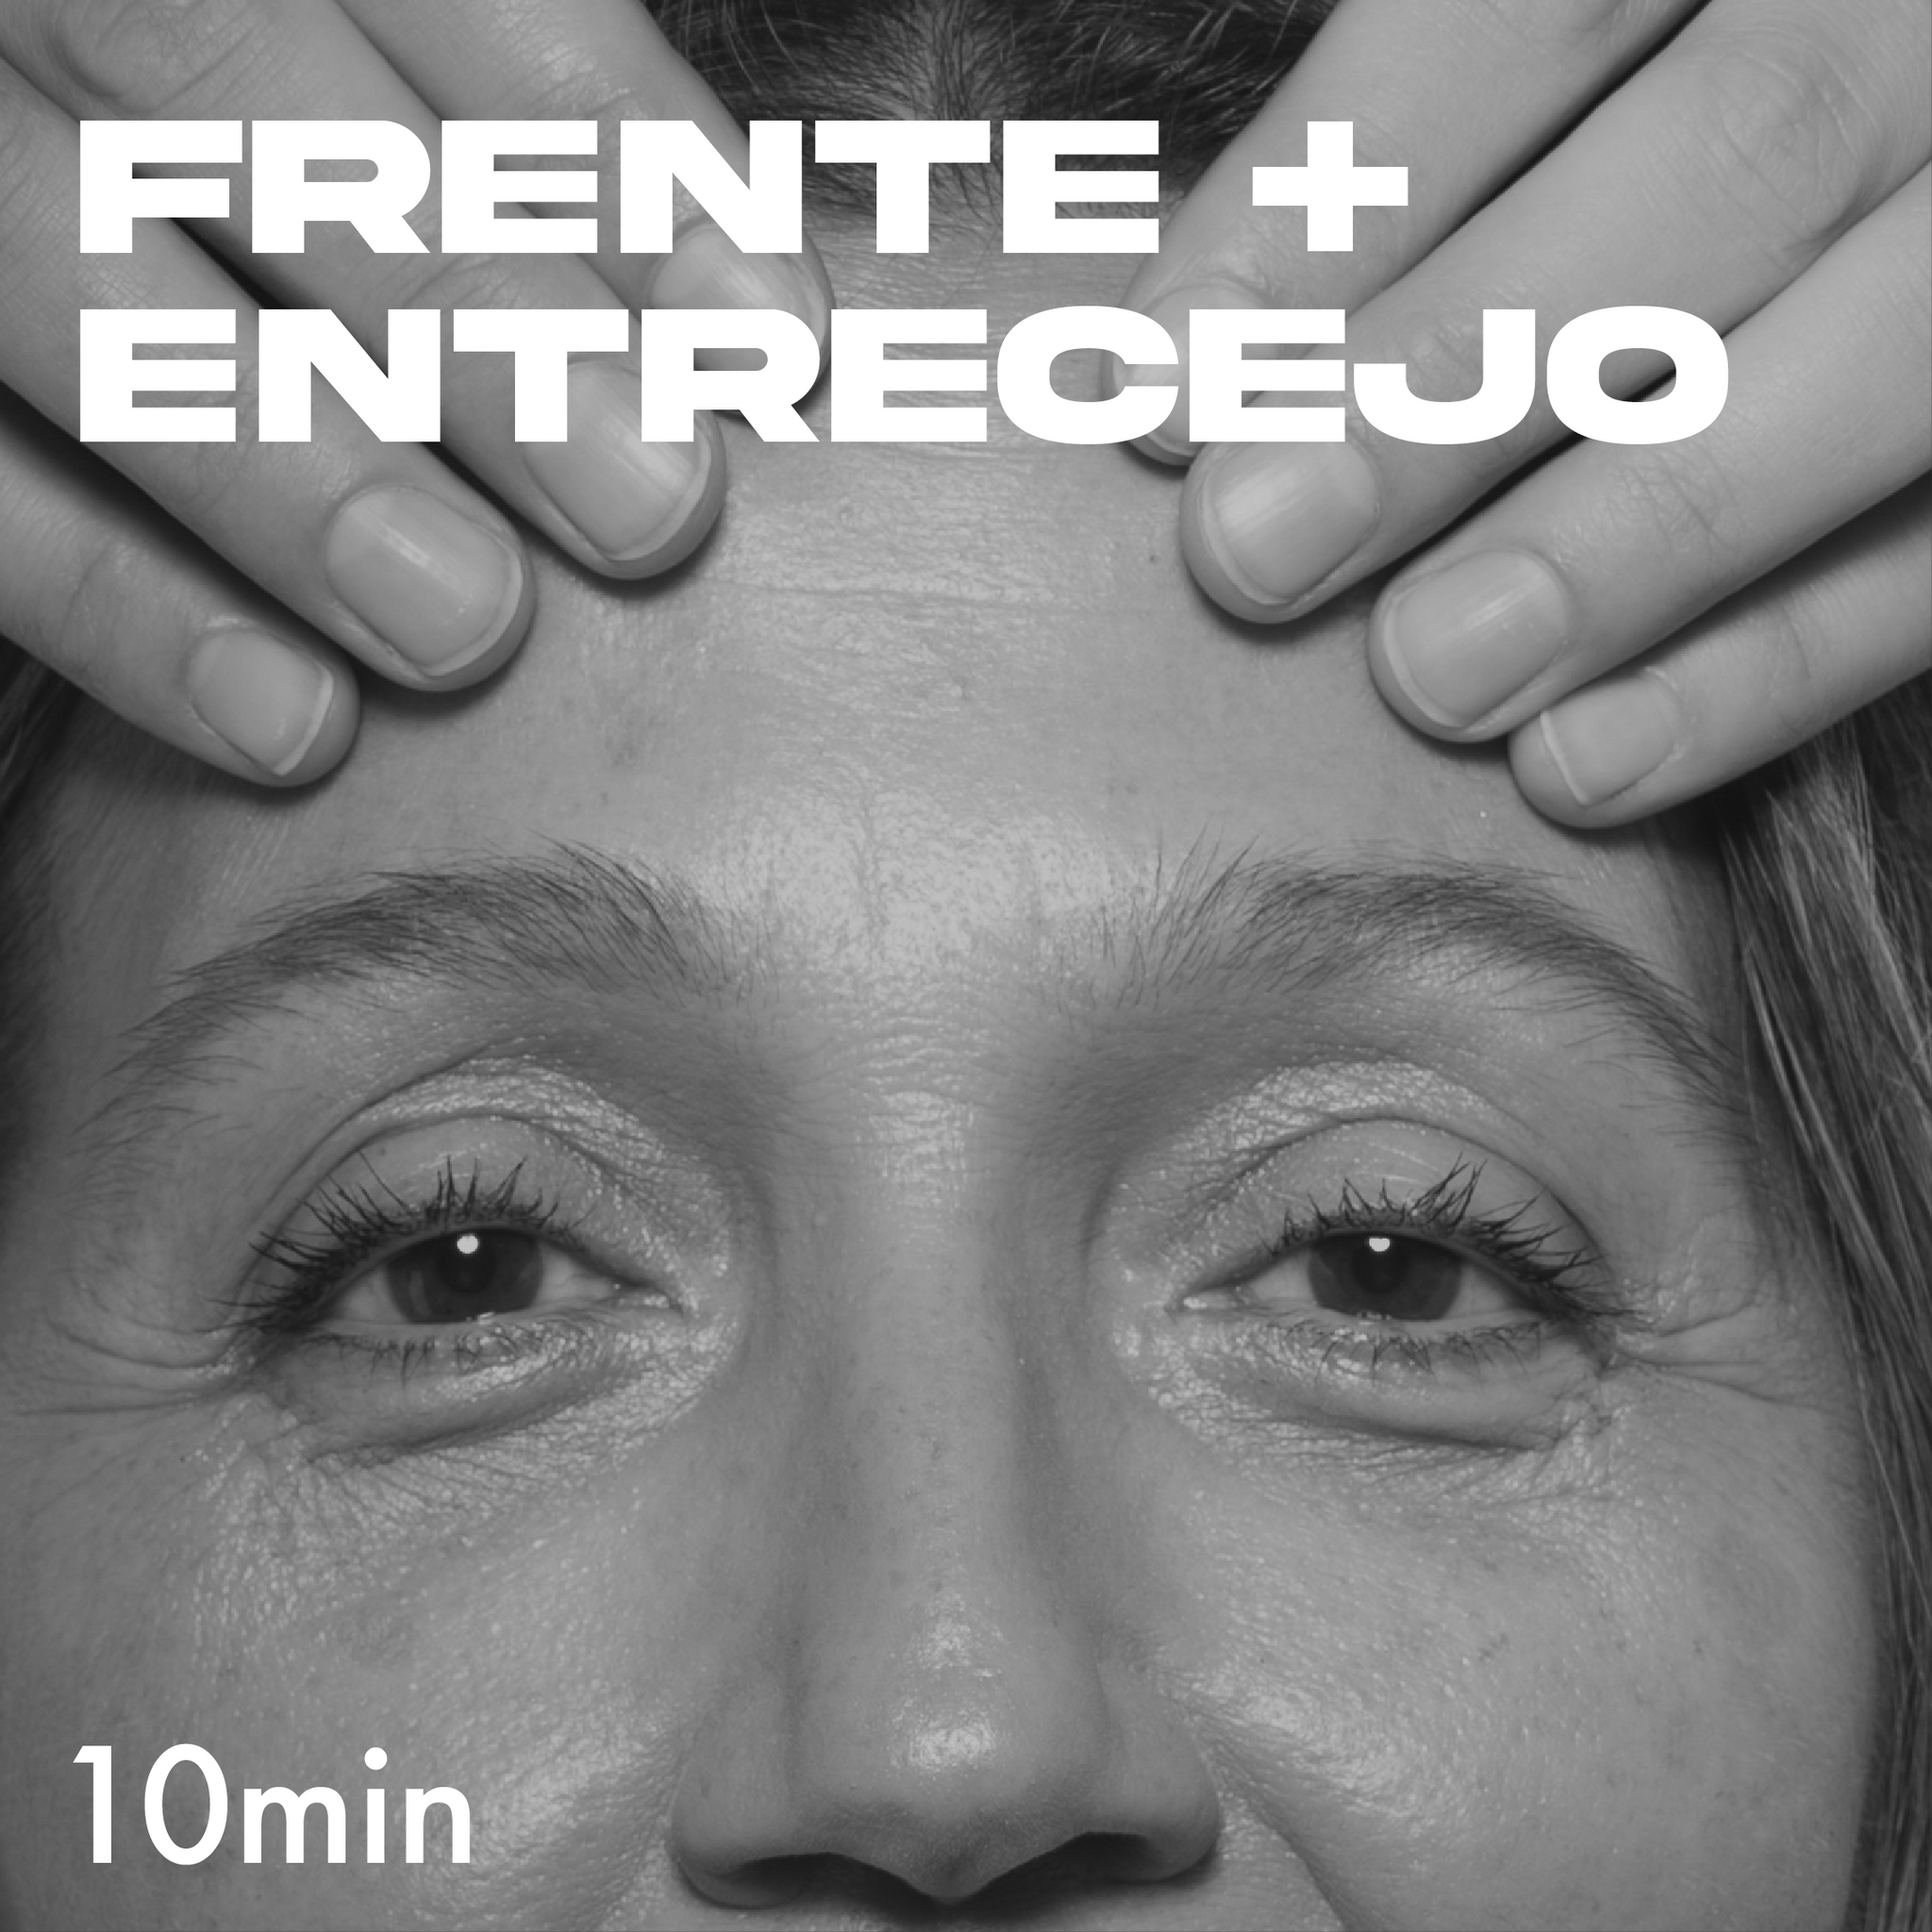 FRENTE + ENTRECEJO